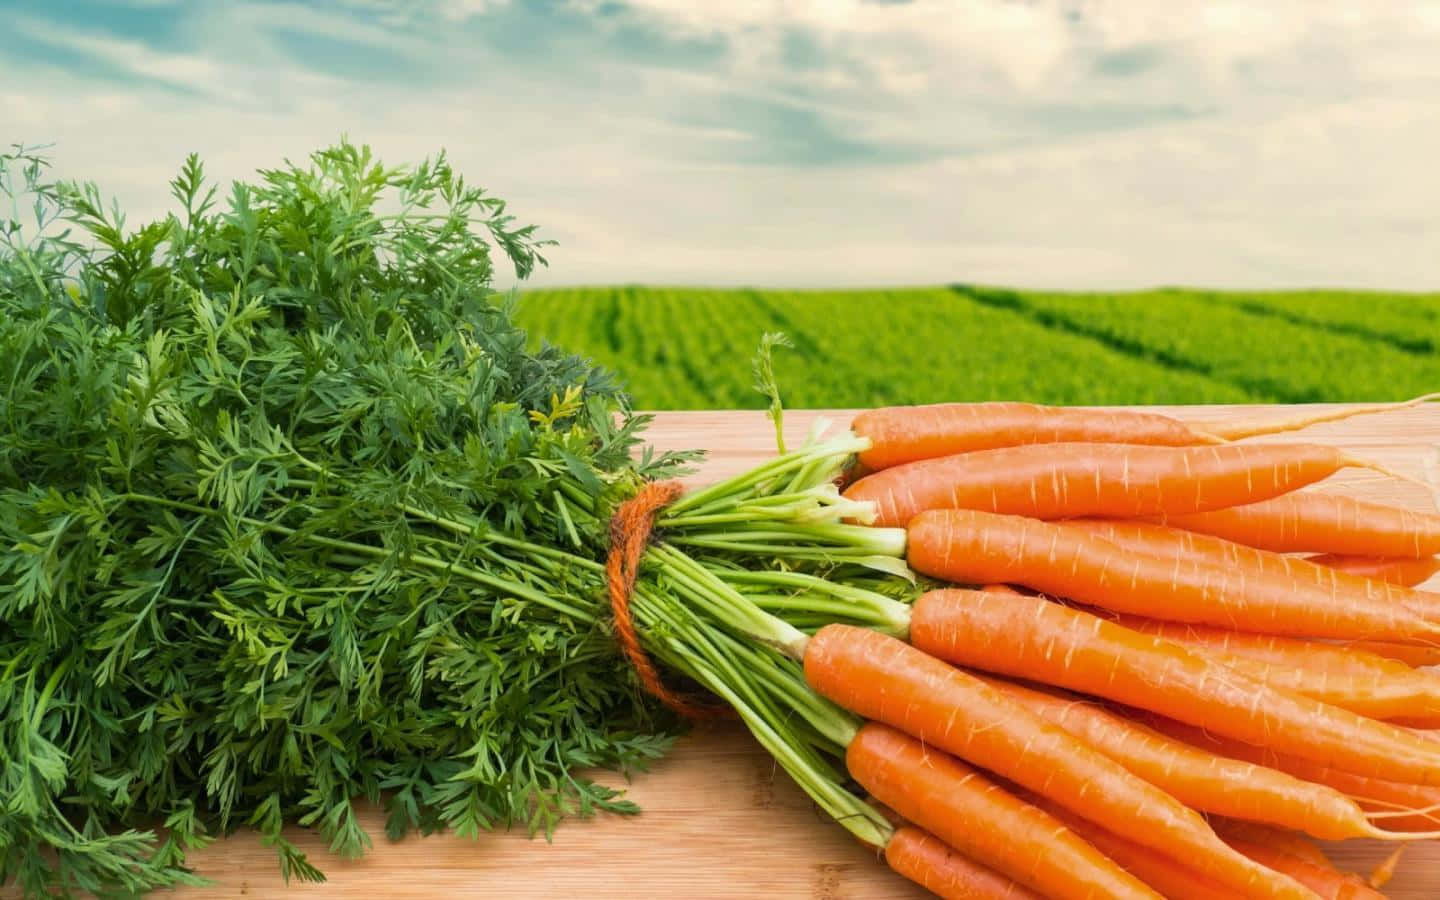 Fresh, juicy carrots straight from the farm!